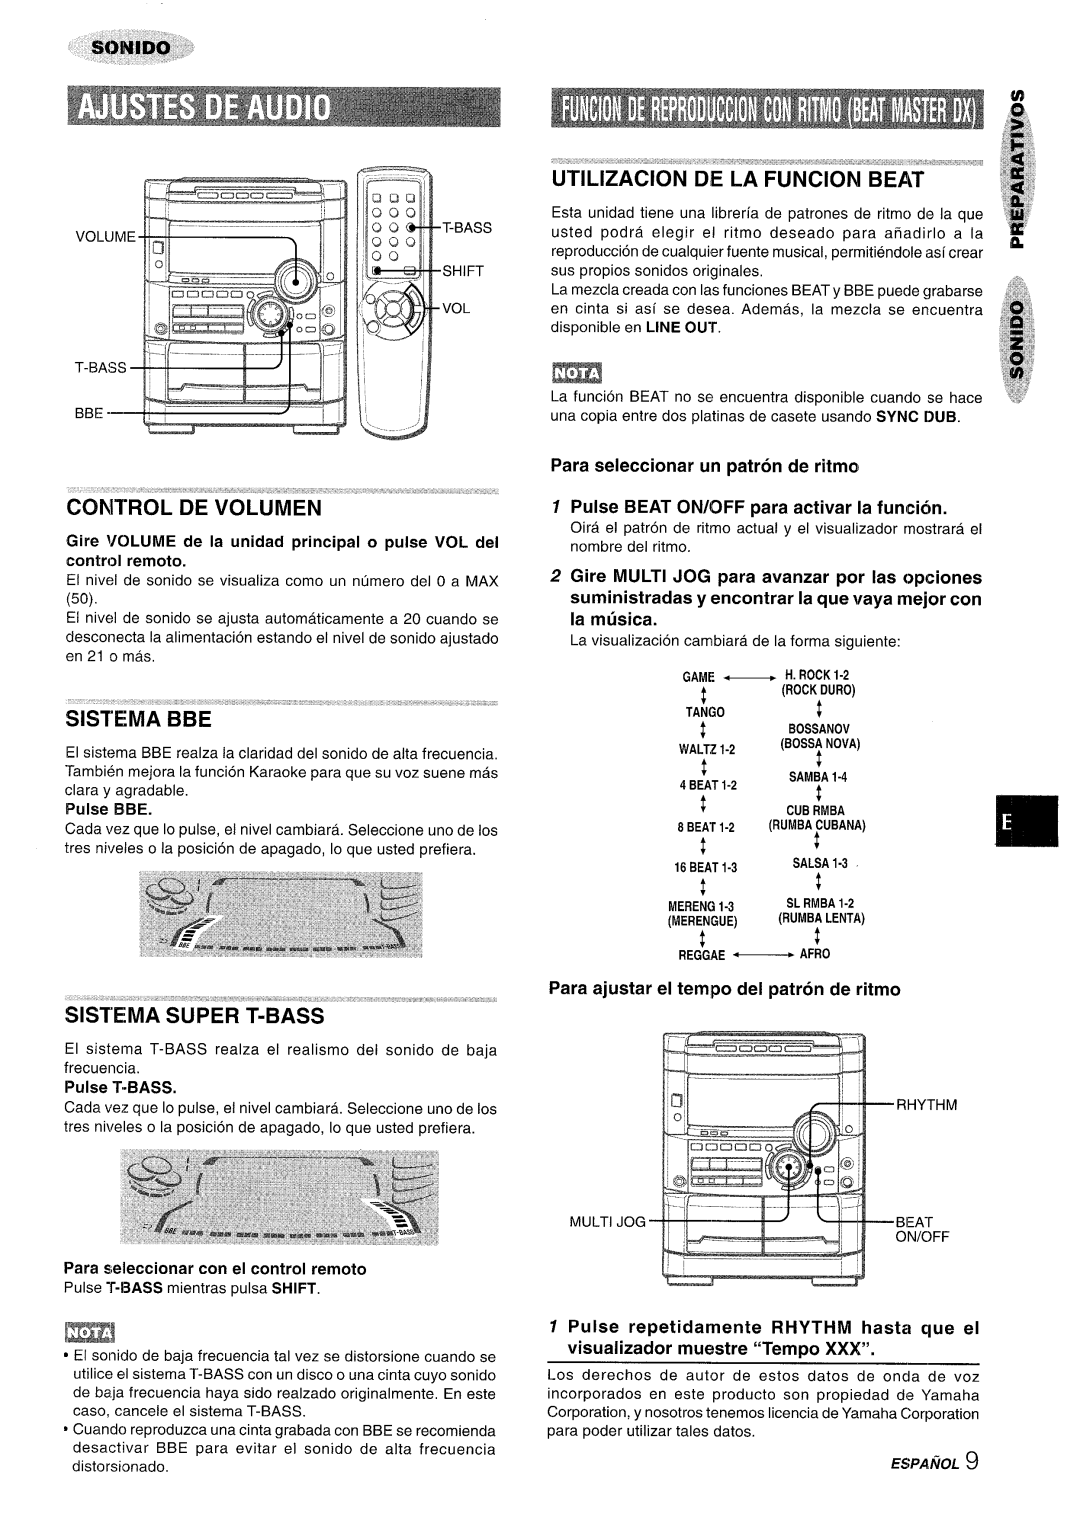 Sony NSX-A777 manual Utilization De La Funcion Beat, $!M3hwm, Para seleccionar un patron de ritmo, control remoto, QC3K20 